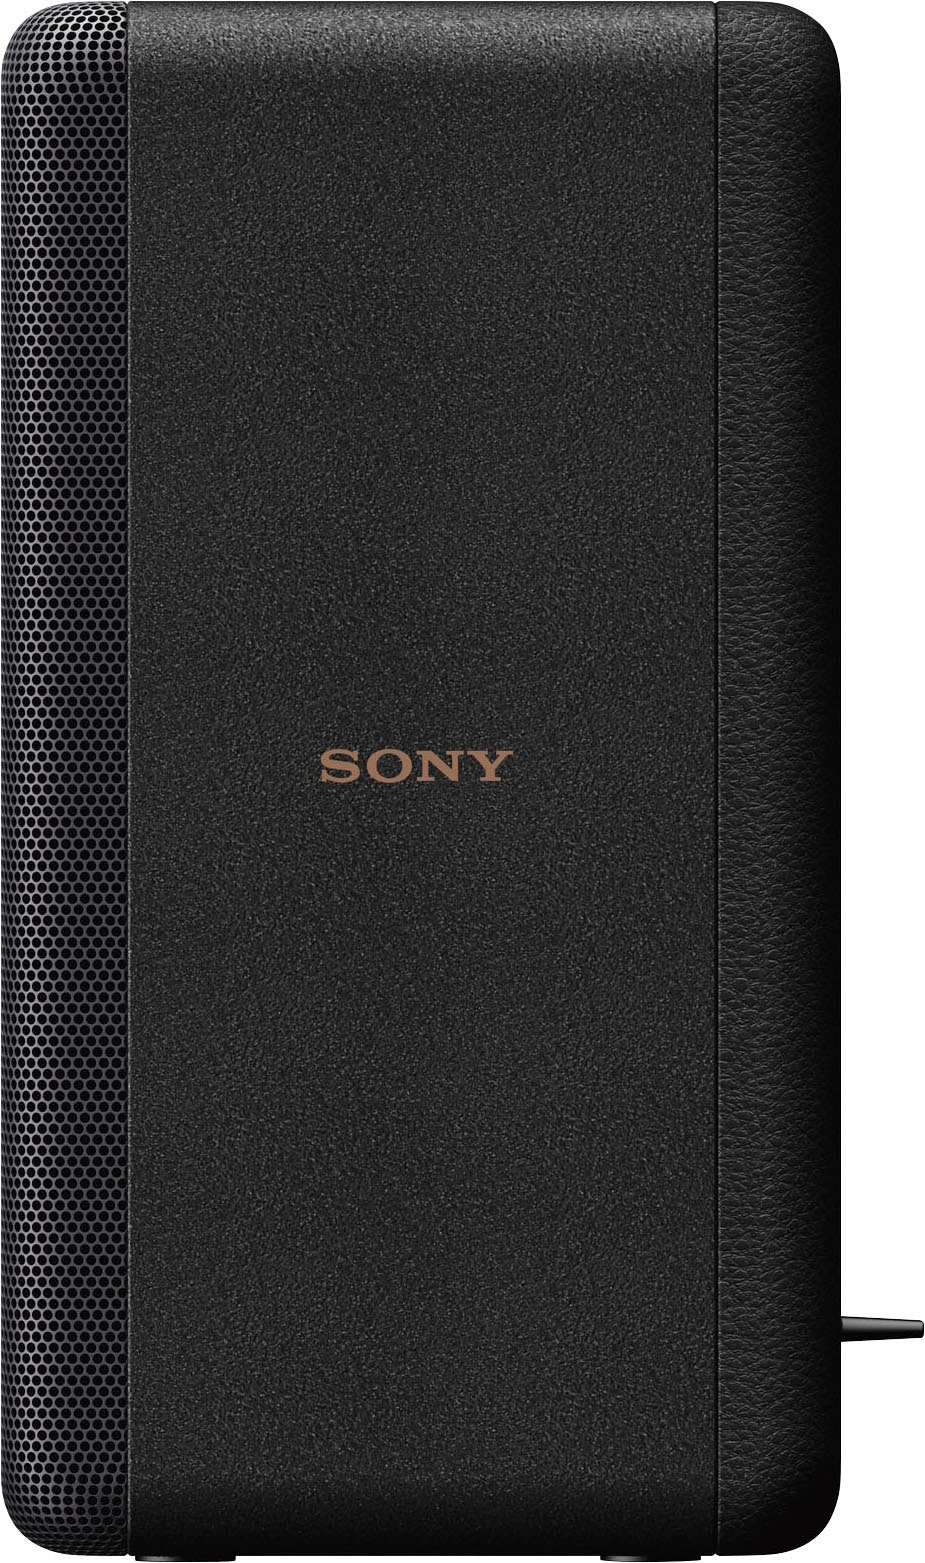 Sony kabellose SA-RS3S 100 Lautsprecher W) zweifache Stereo Rear- (WLAN,